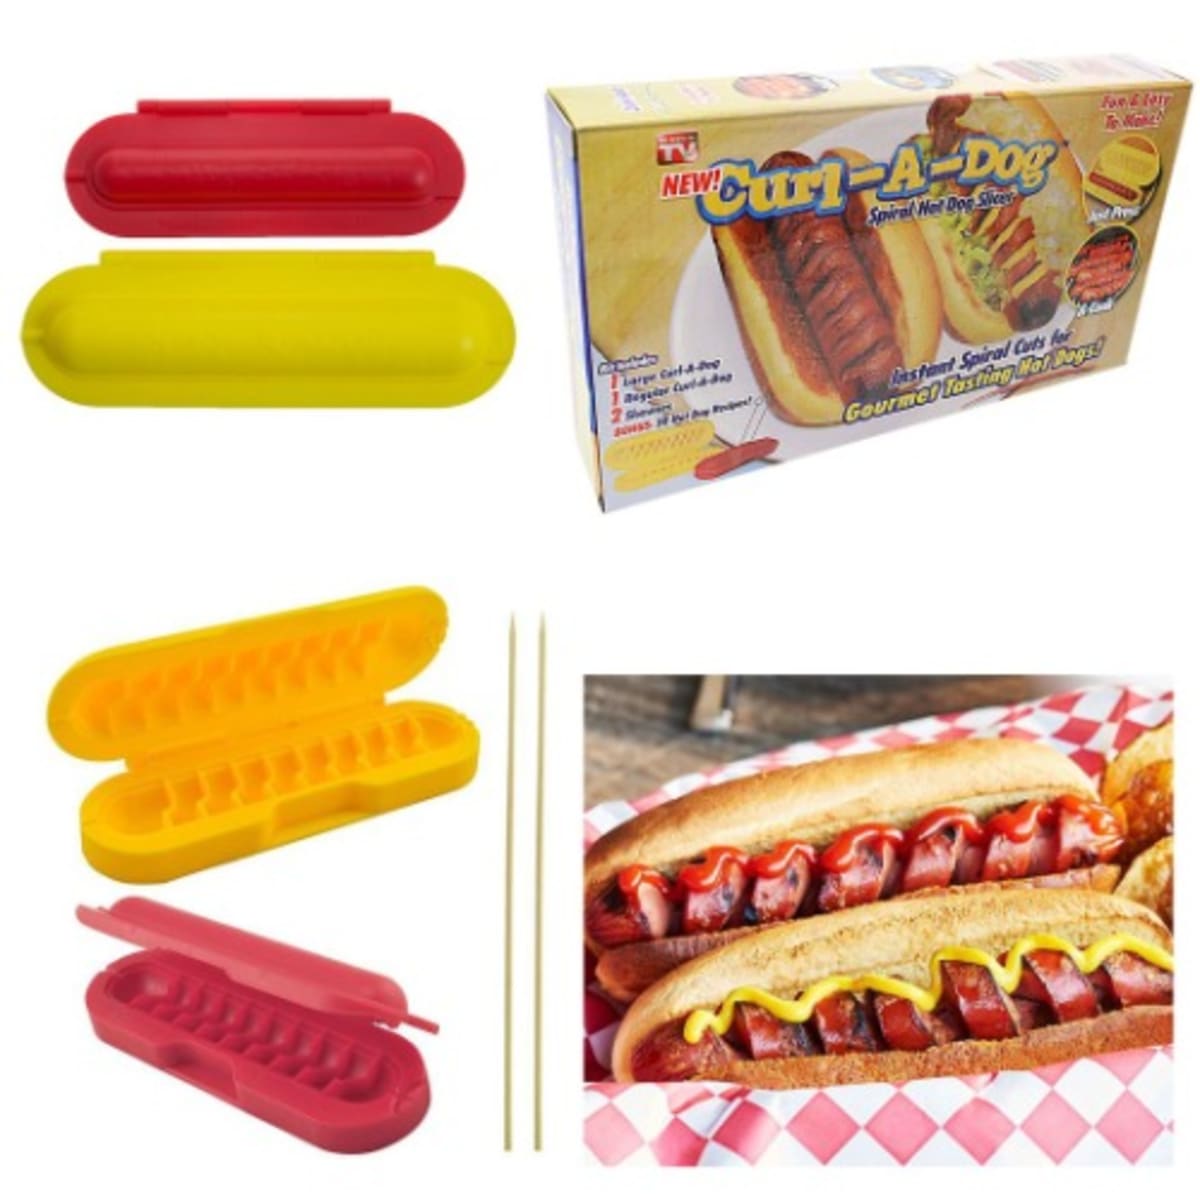 Curl-A-Dog Spiral Hot Dog Slicer - The Homespun Chics